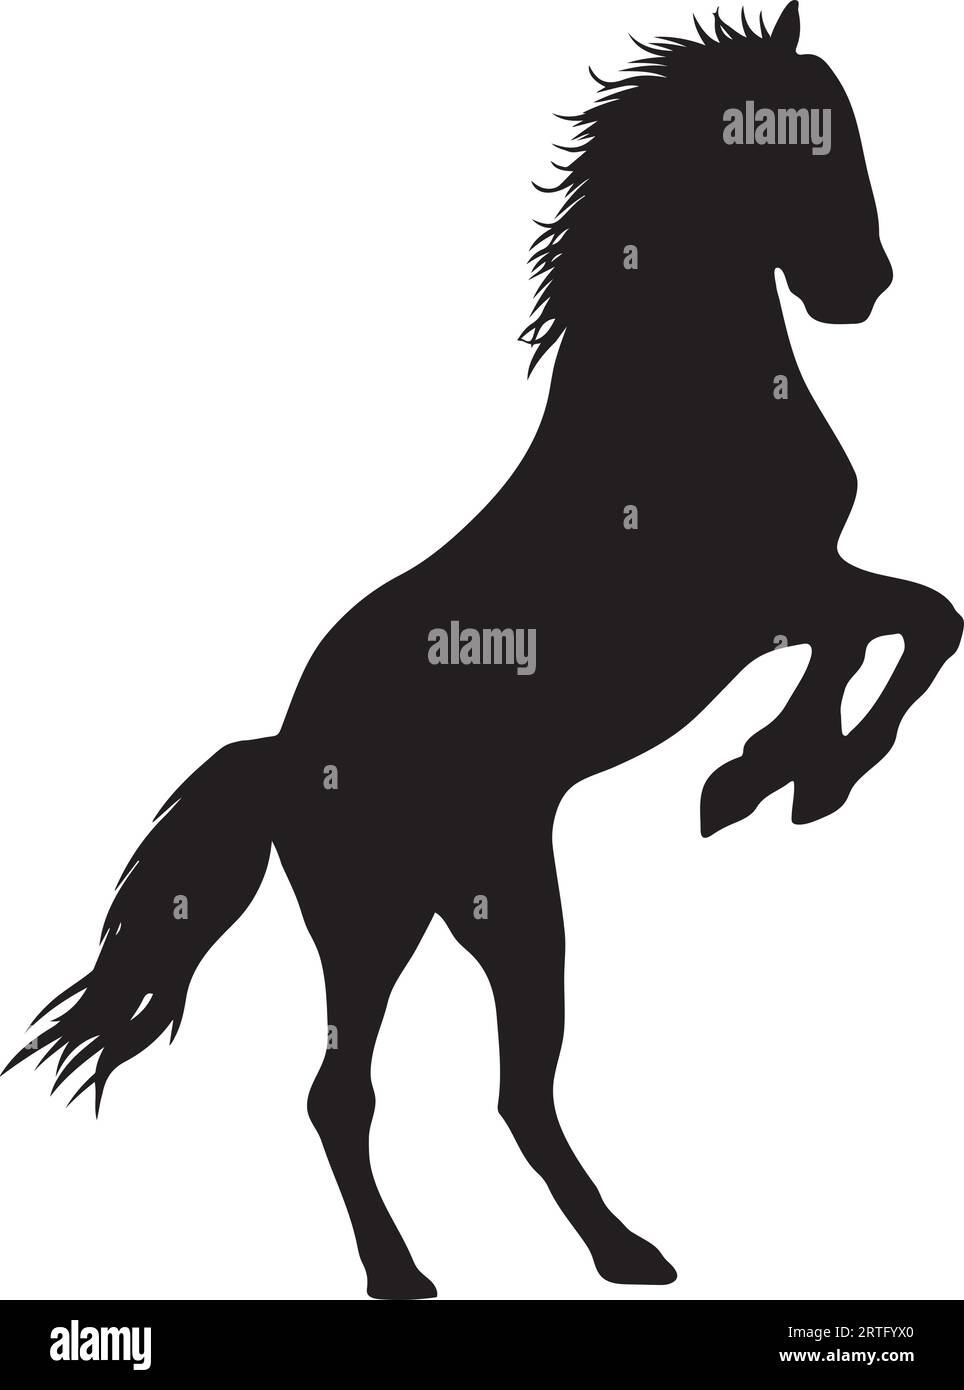 Horse show silhouette or vector Stock Vector